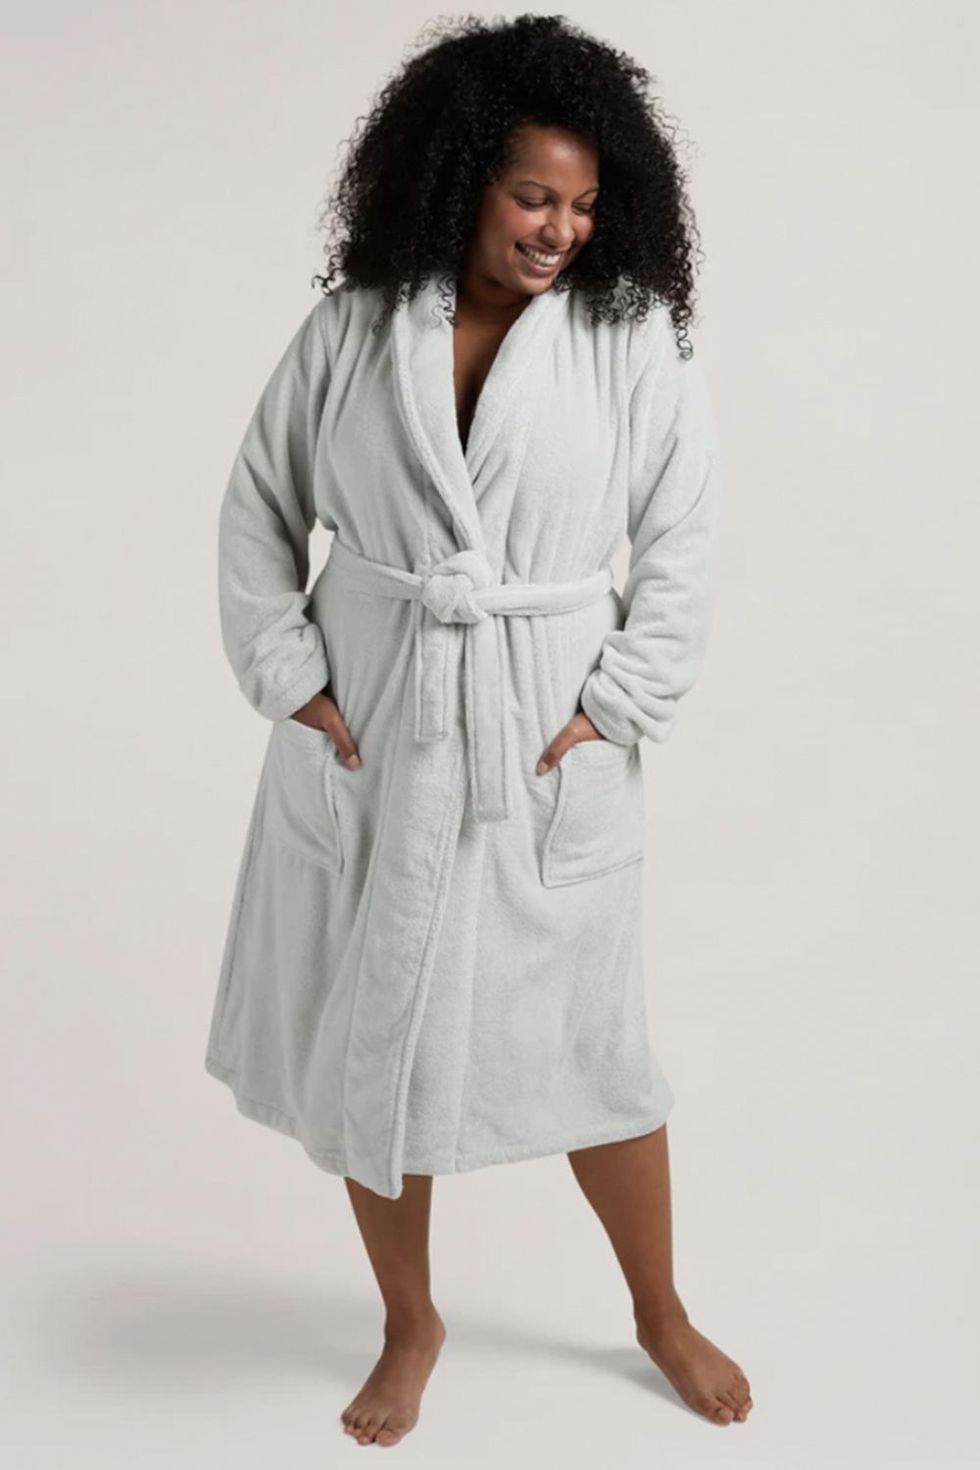 NY Threads Womens Fleece Bath Robe - Shawl Collar Soft Plush Spa Robe,  White, Medium